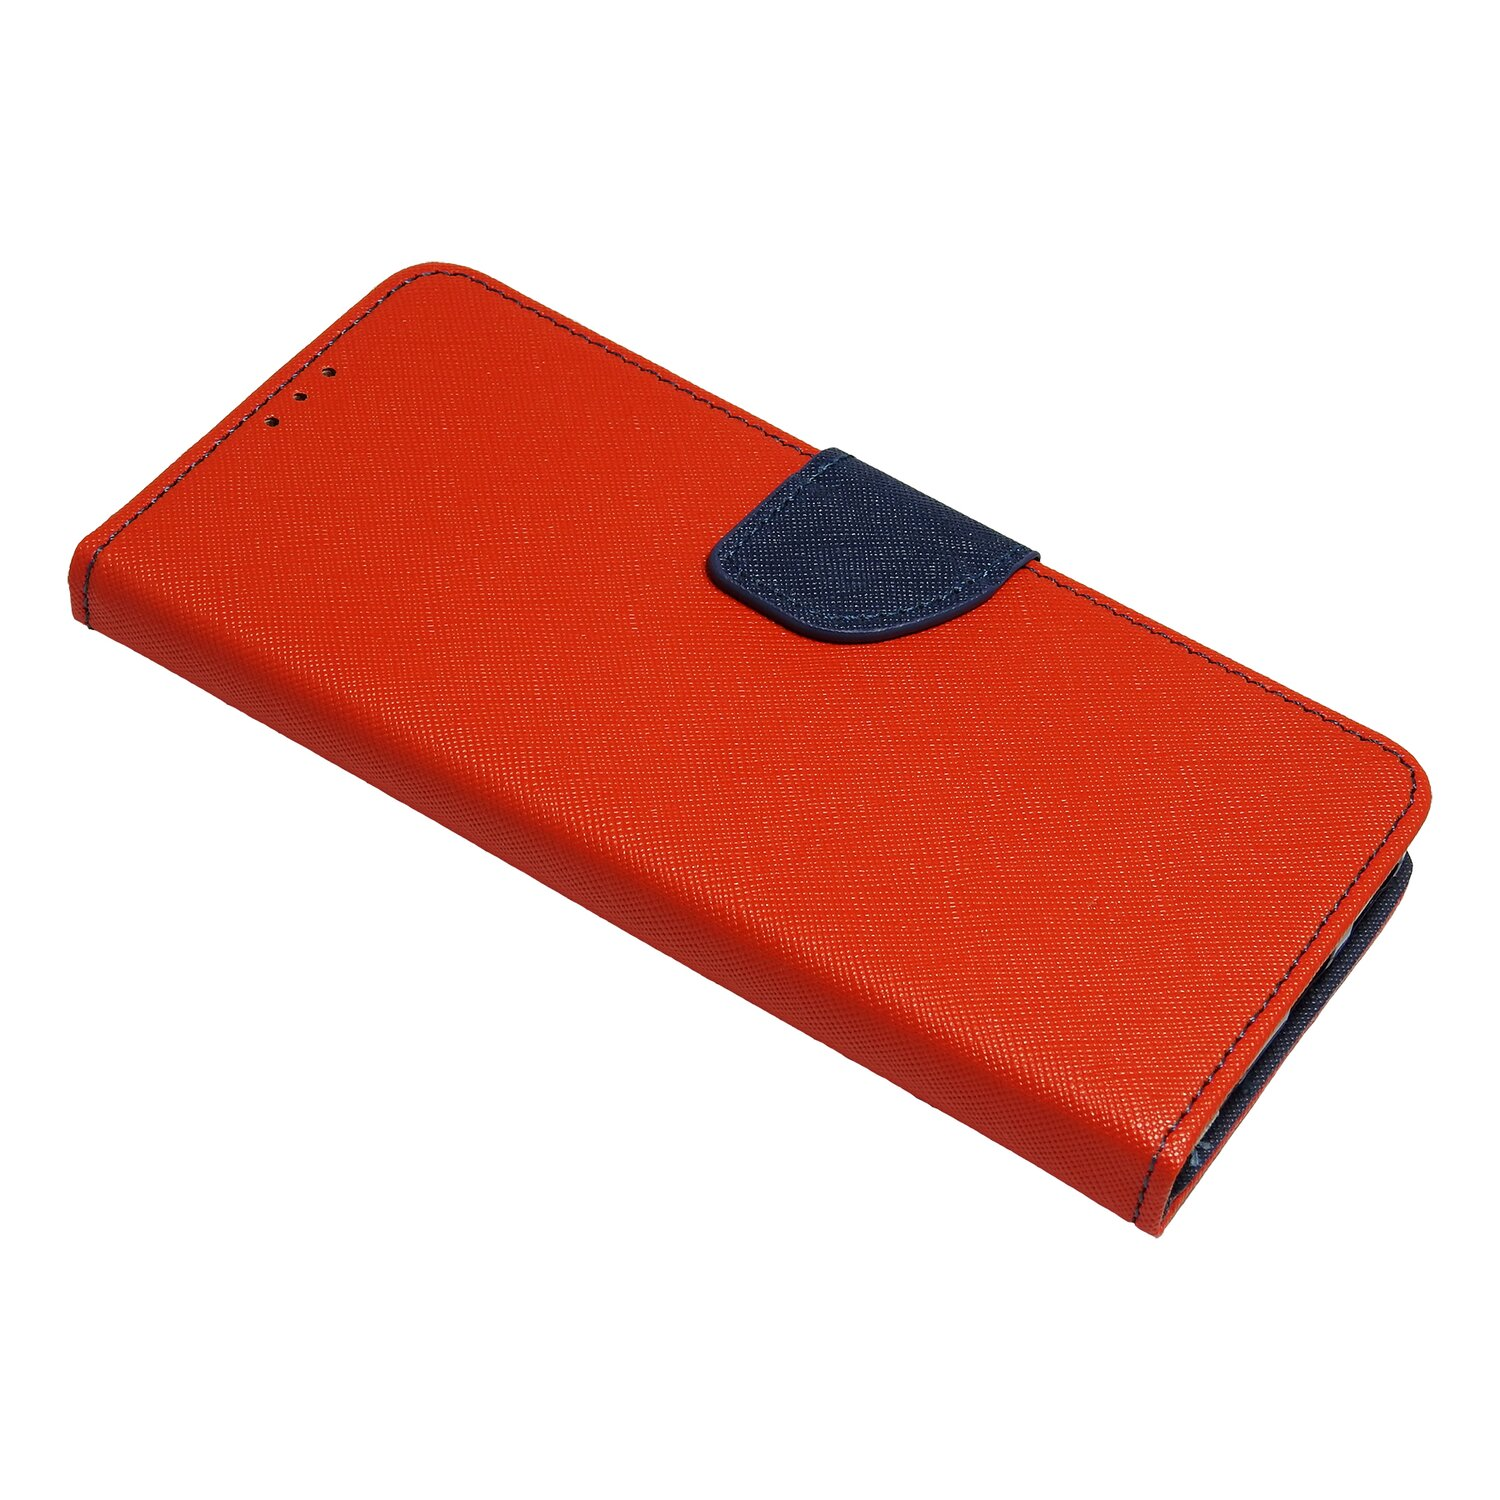 COFI Tasche, MOTO Bookcover, Rot-Blau Buch G30, Motorola,